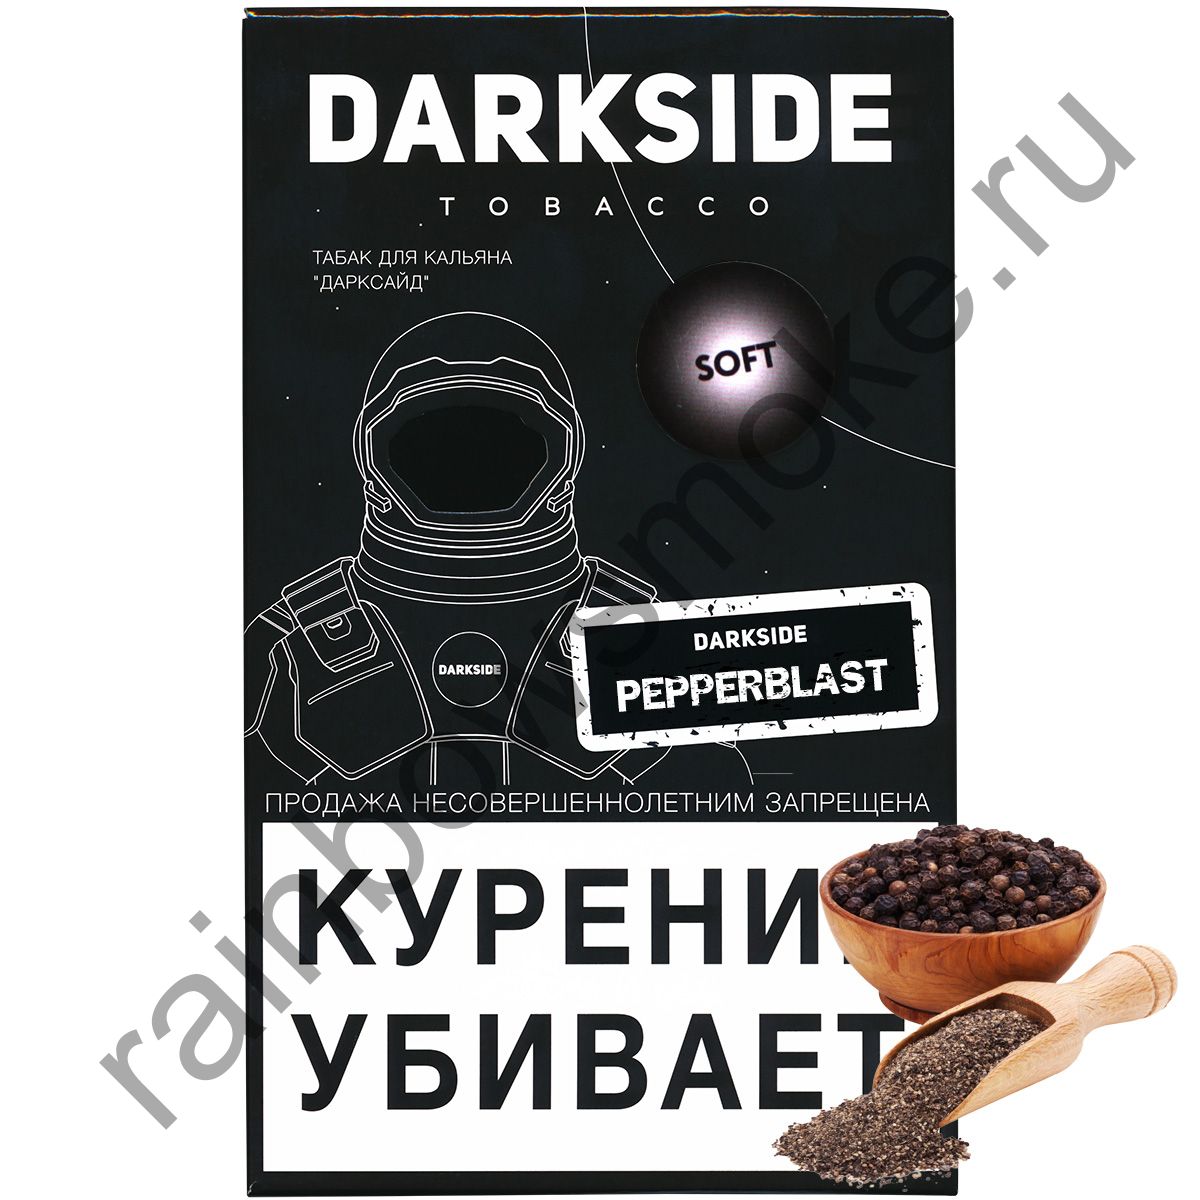 Darkside soup. Darkside 50 гр. Darkside Soft 100. Табак Dark Side Medium - Pepperblast (перец). Фольга Дарксайд.